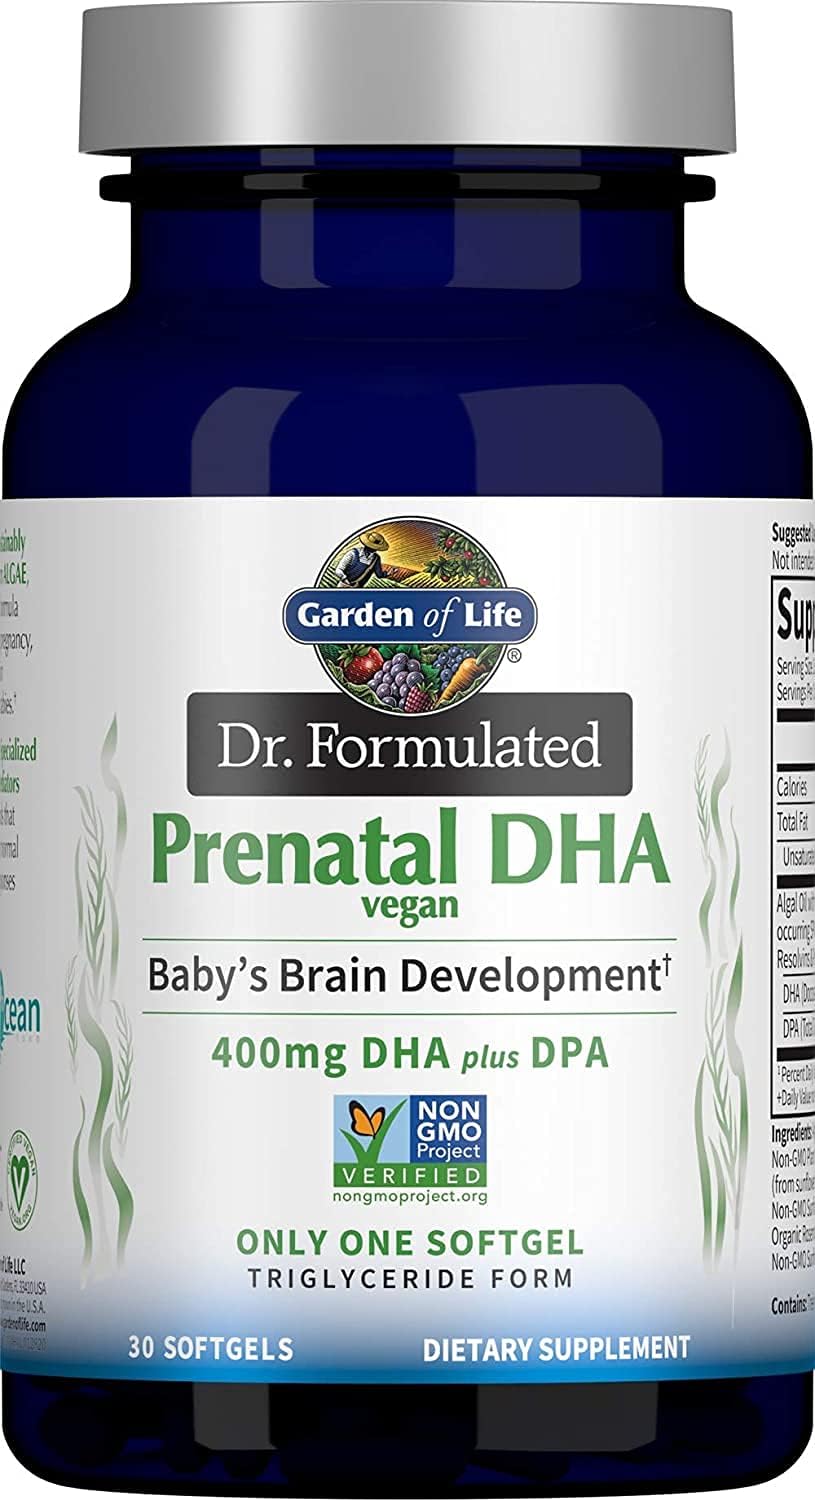 Garden of Life Dr. Formulated Prenatal Vegan DHA - Certified Vegan Ome